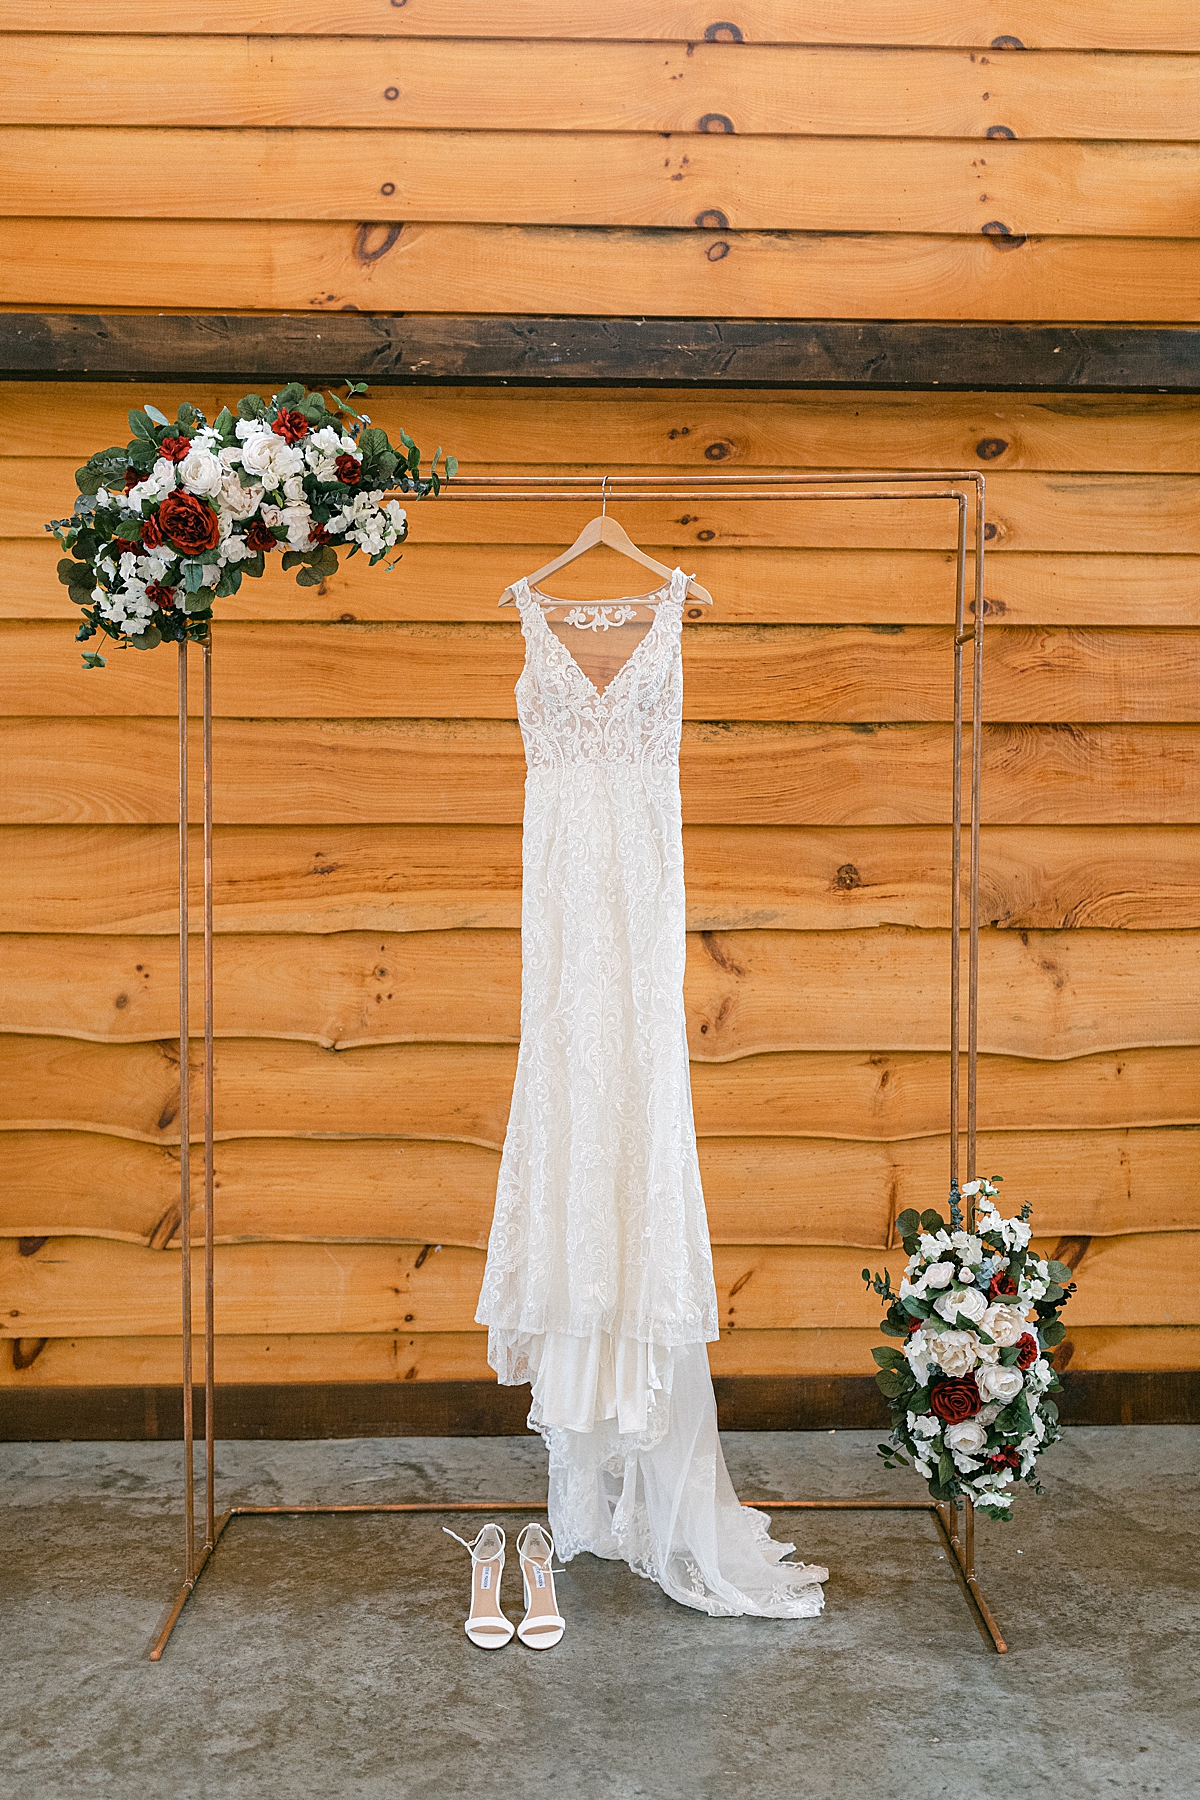 wedding dress hanging up before ceremony